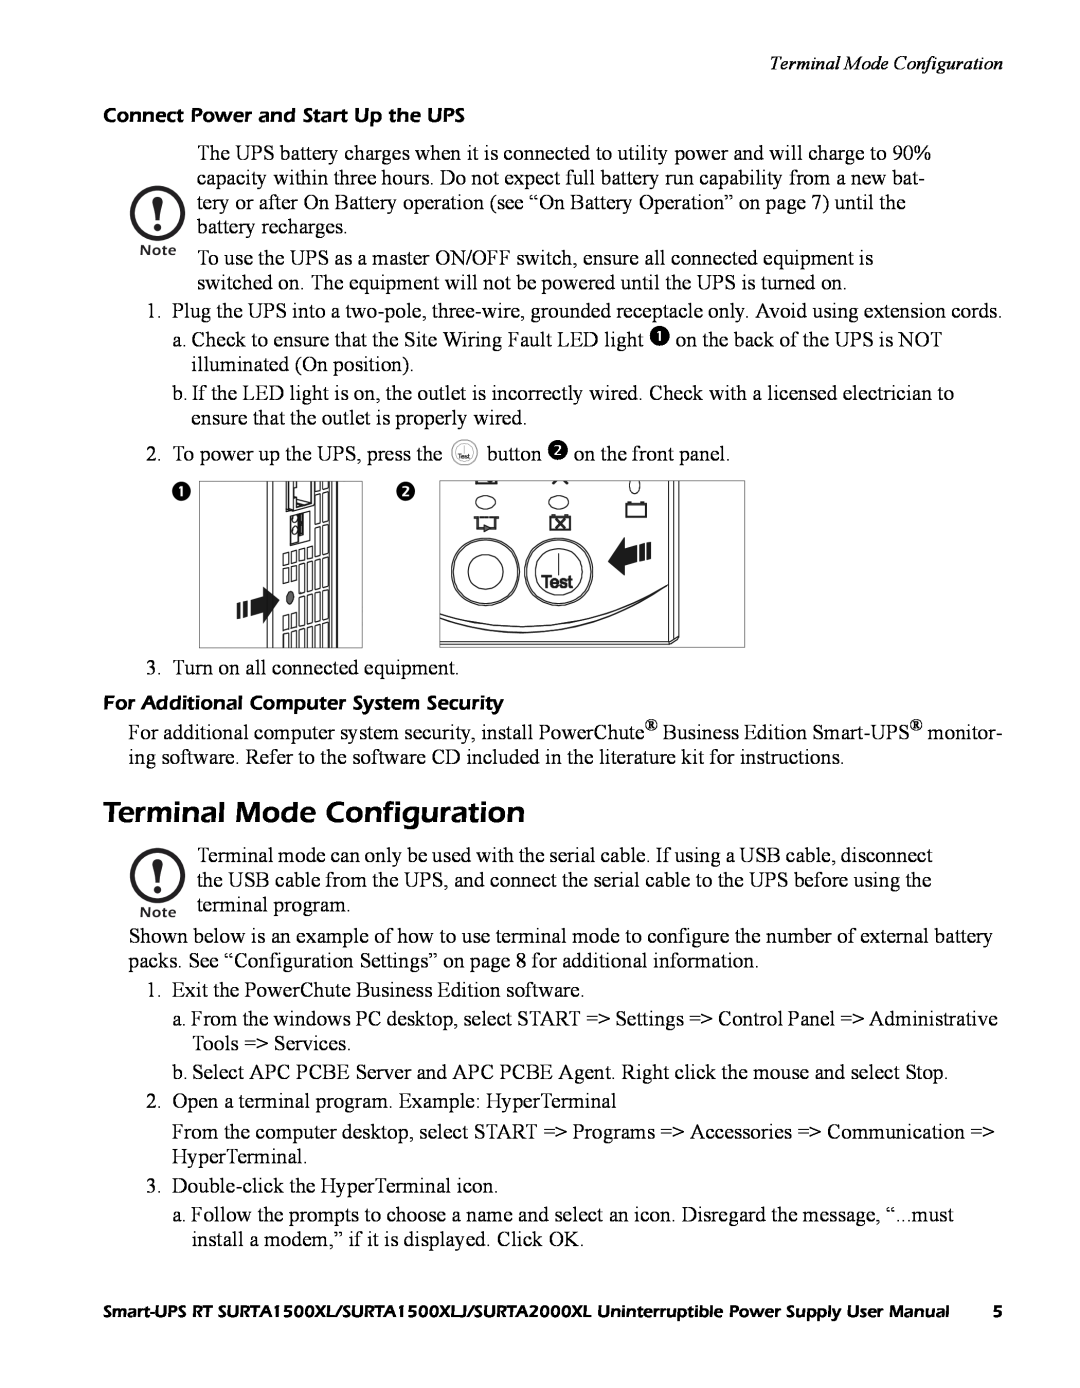 American Power Conversion SURTA2000XL, SURTA1500XLJ user manual Terminal Mode Configuration 